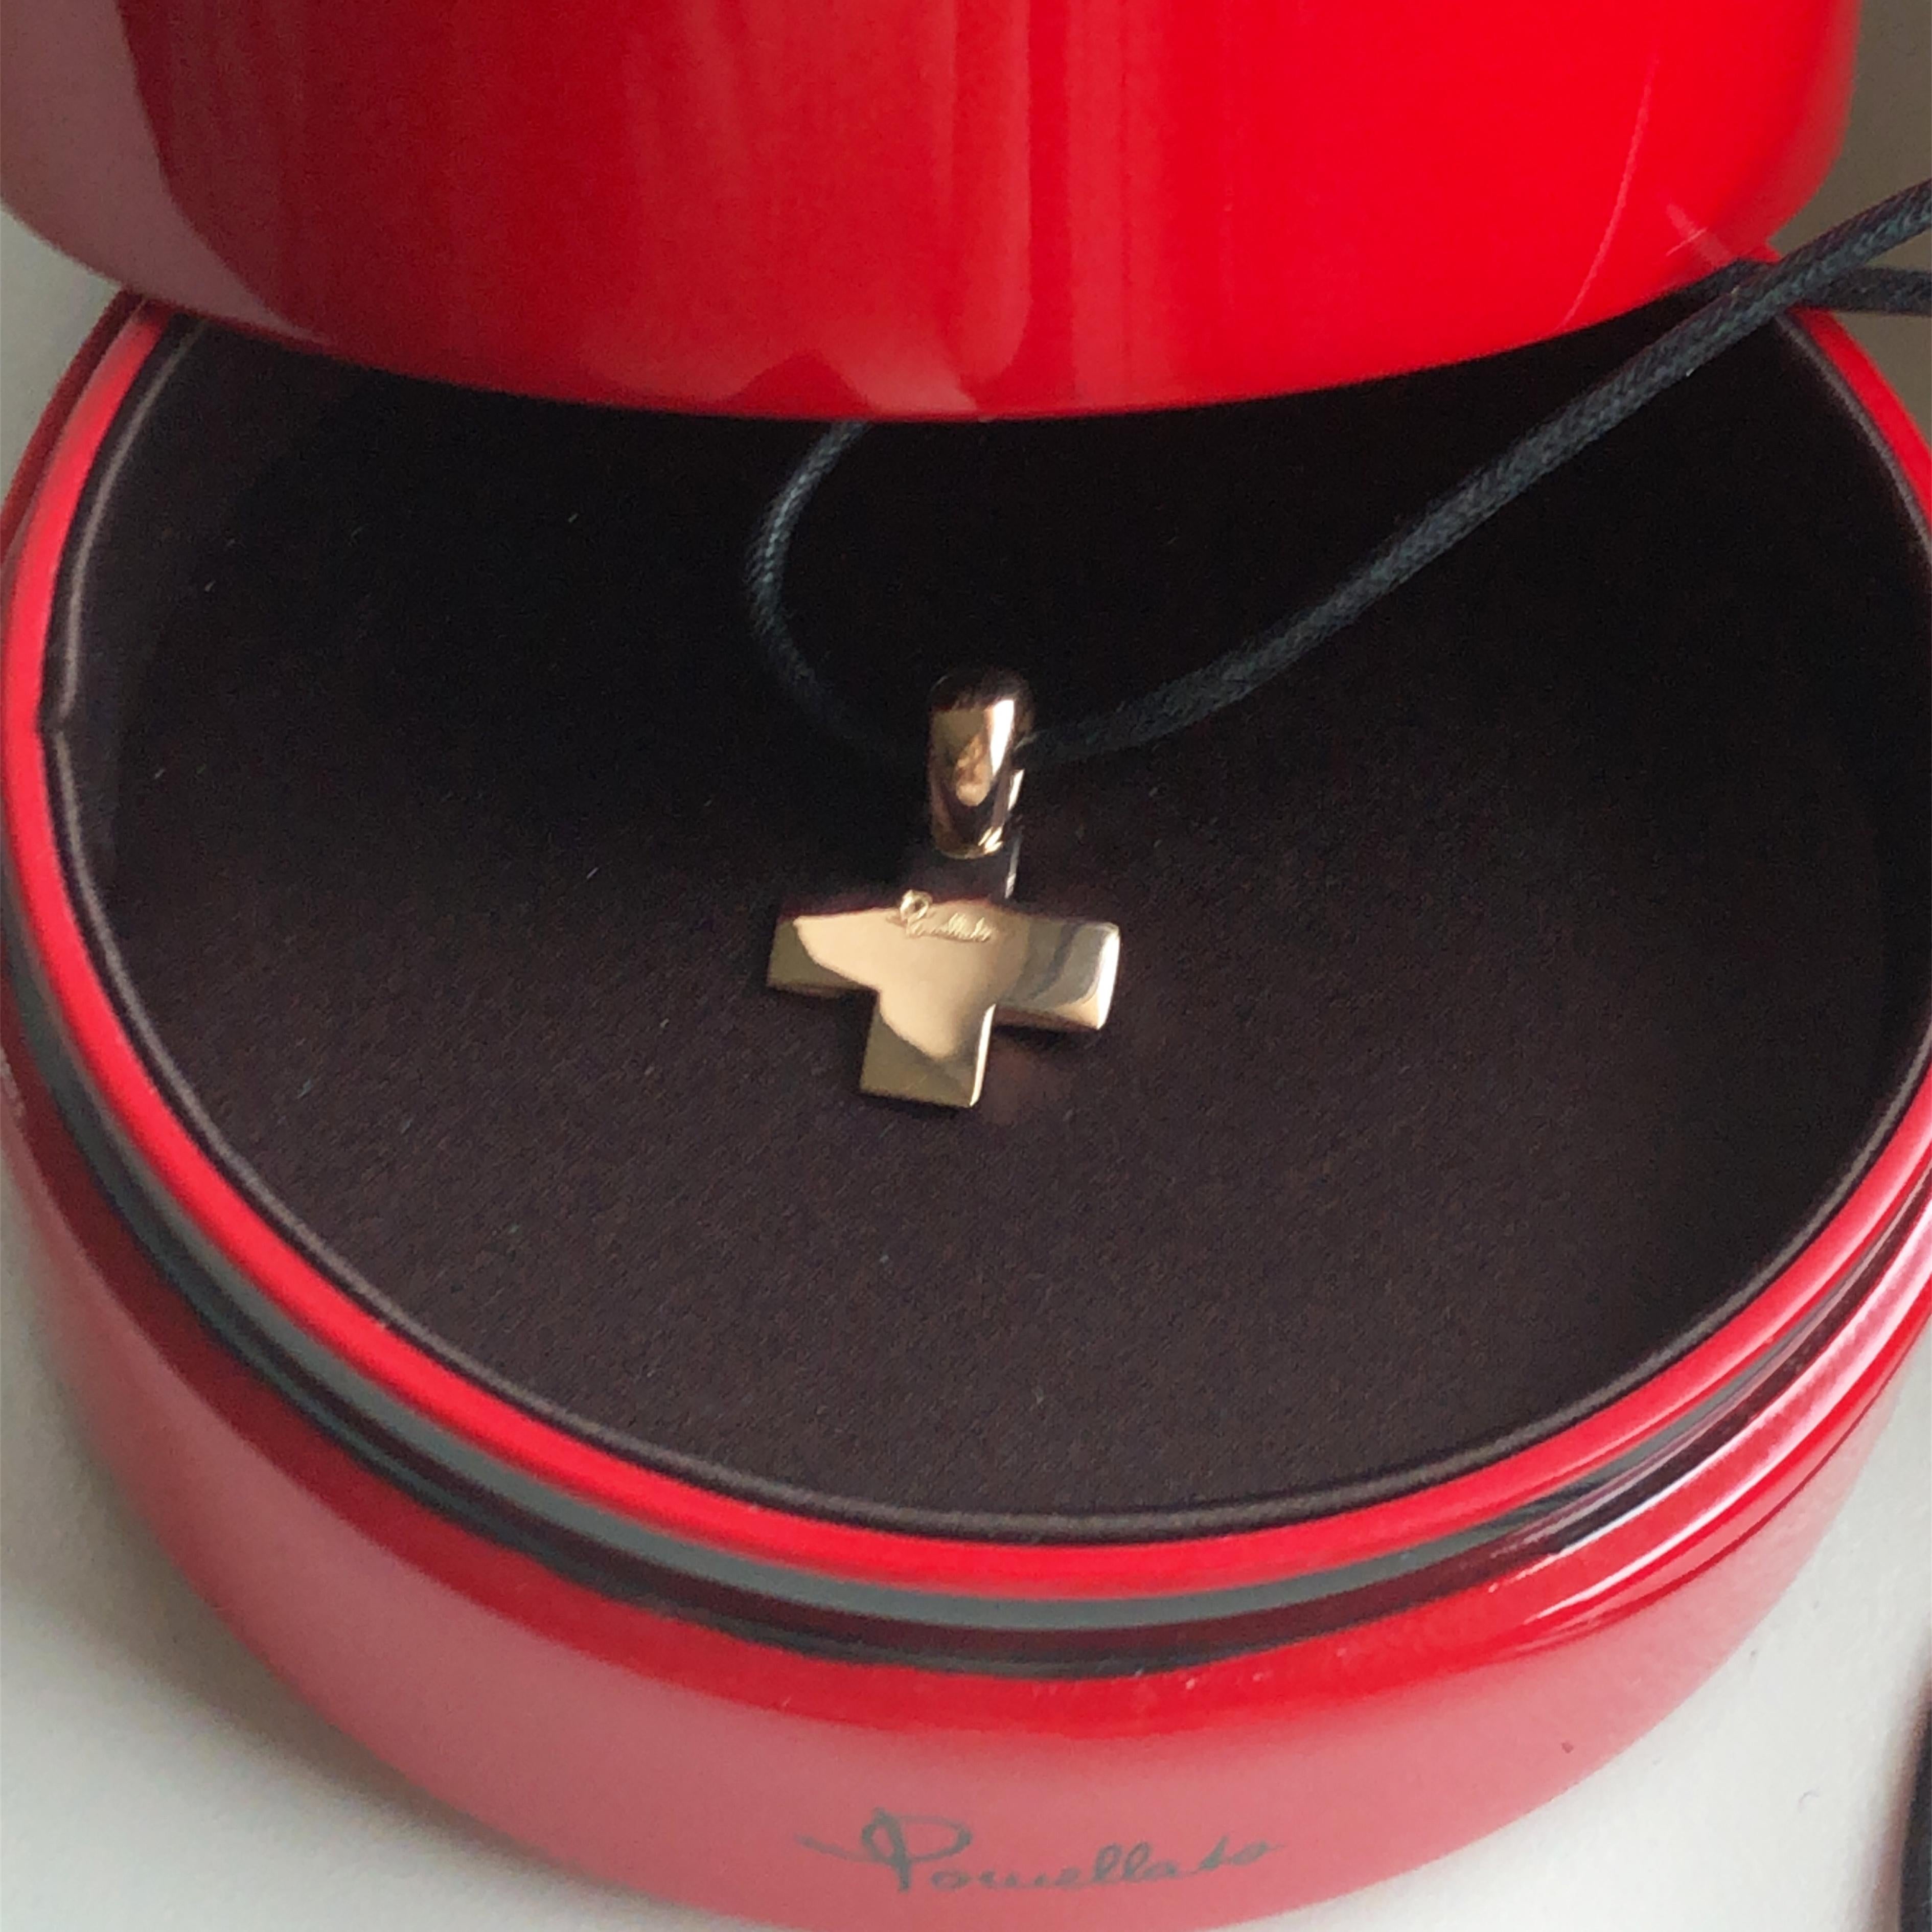 dominican cross necklace